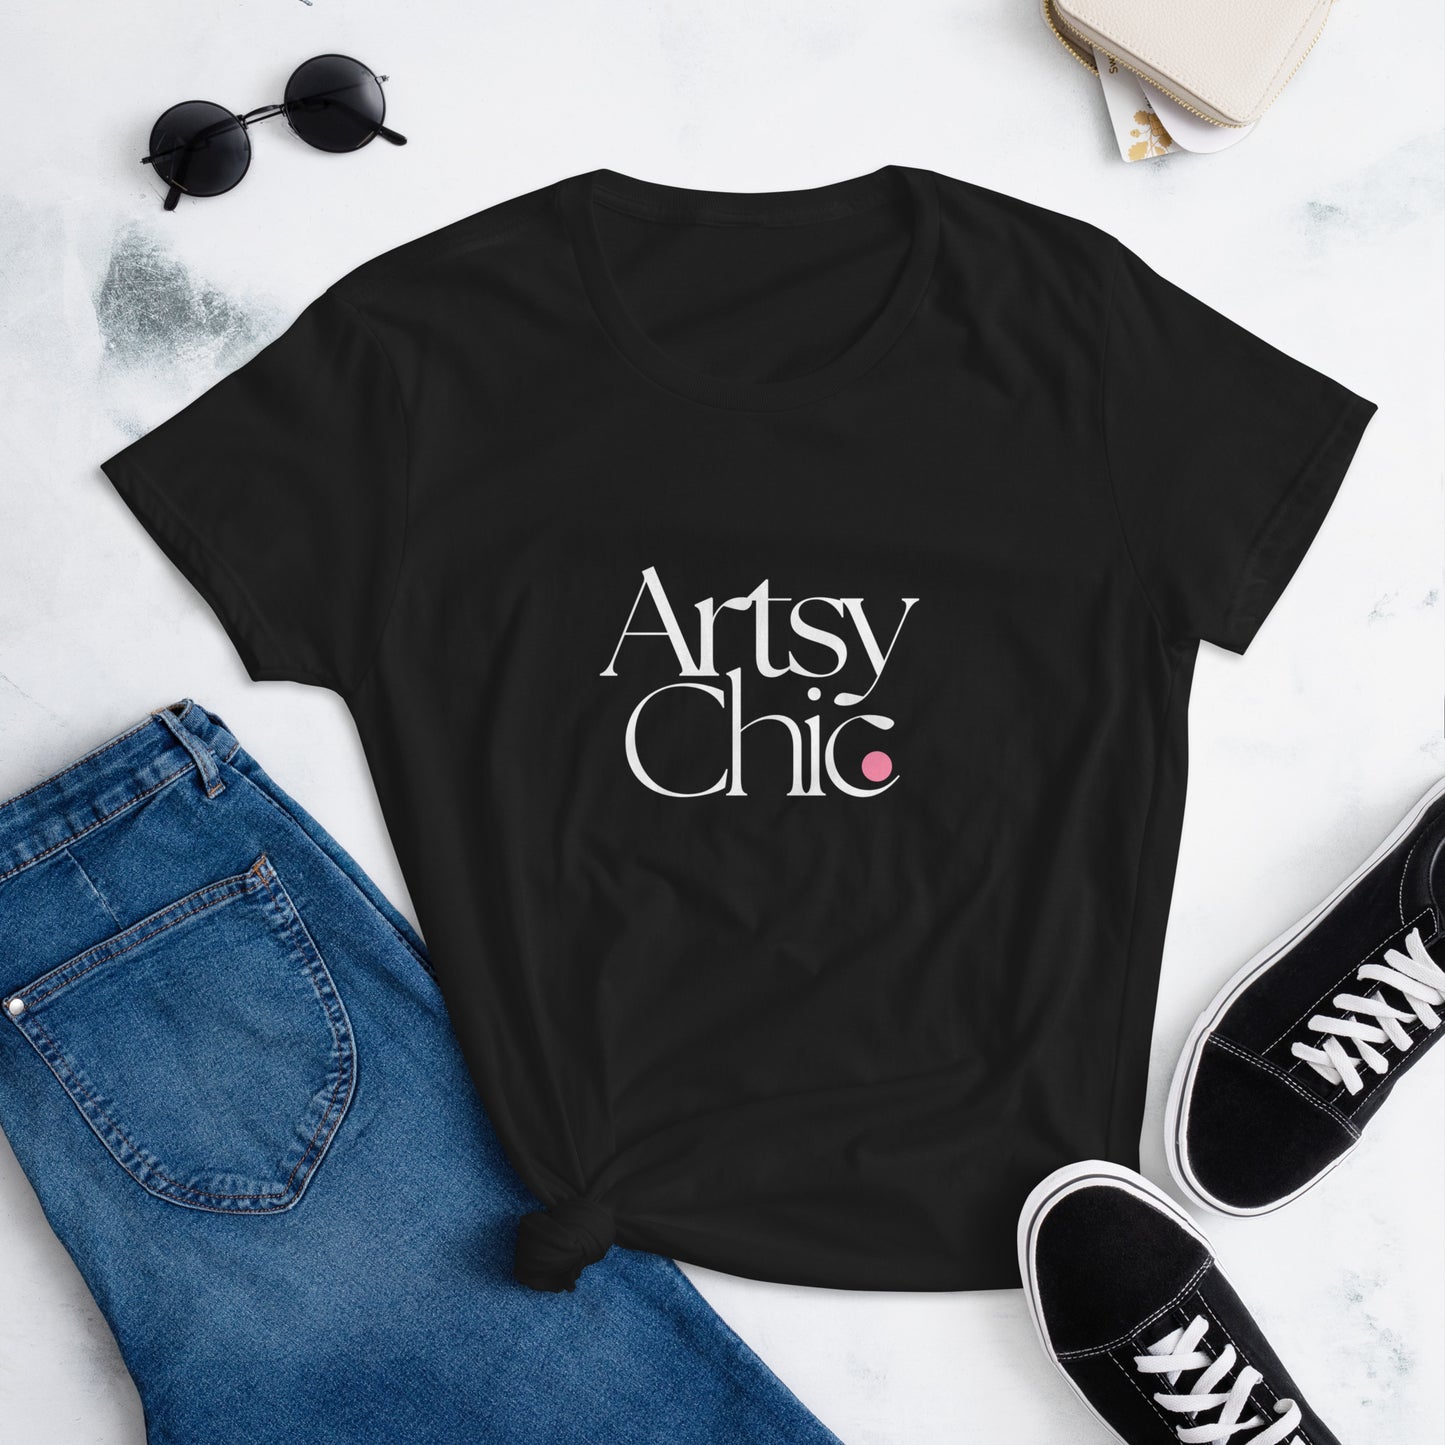 ARTSY CHIC Women's short sleeve t-shirt